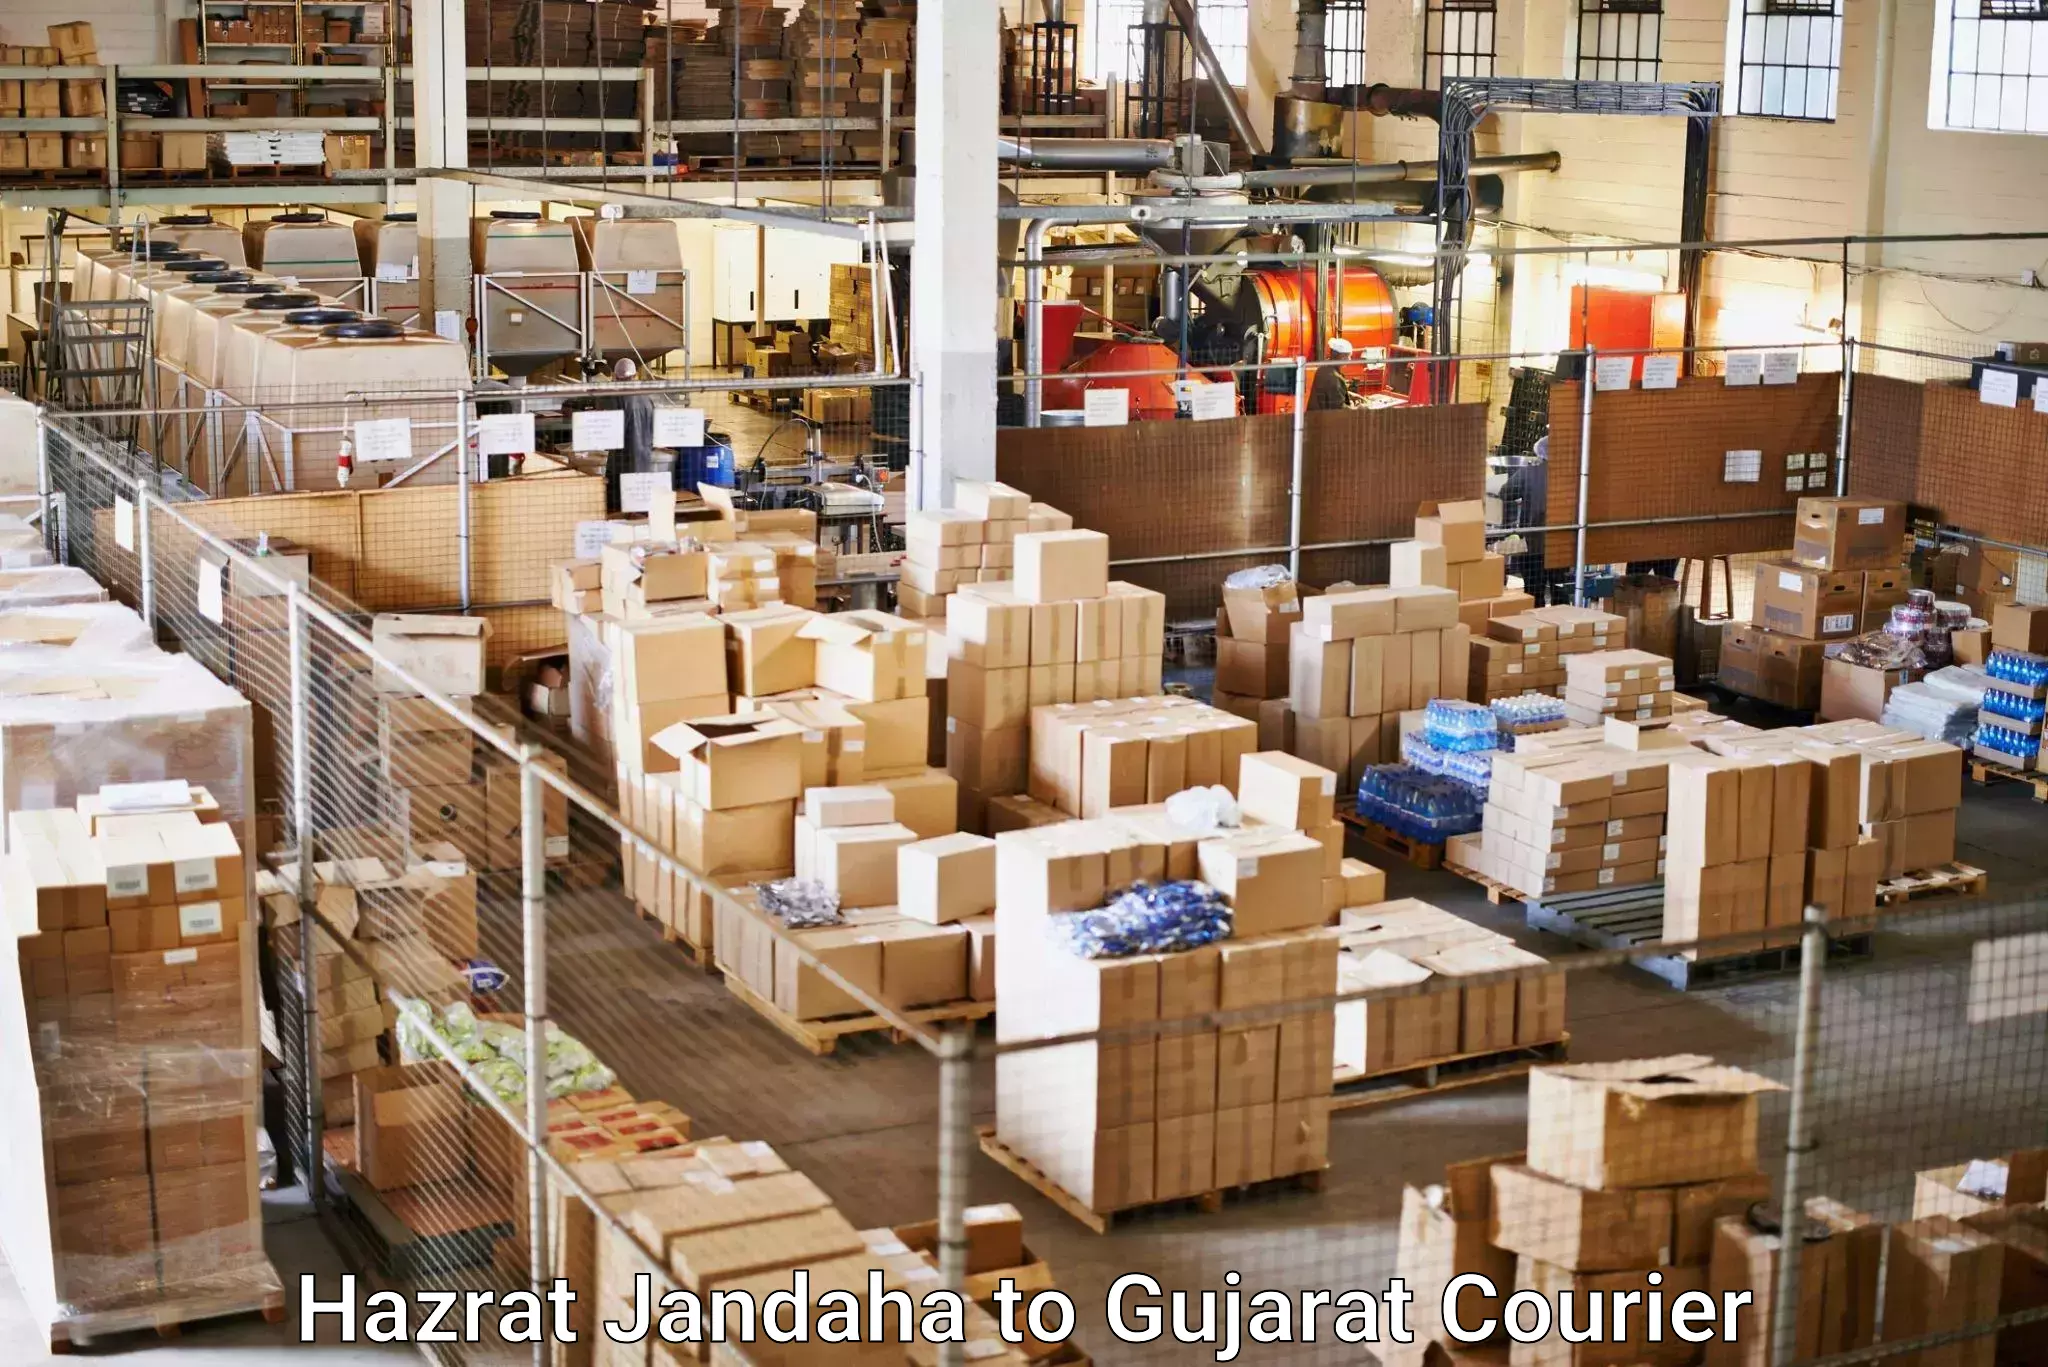 Express delivery network Hazrat Jandaha to Jasdan